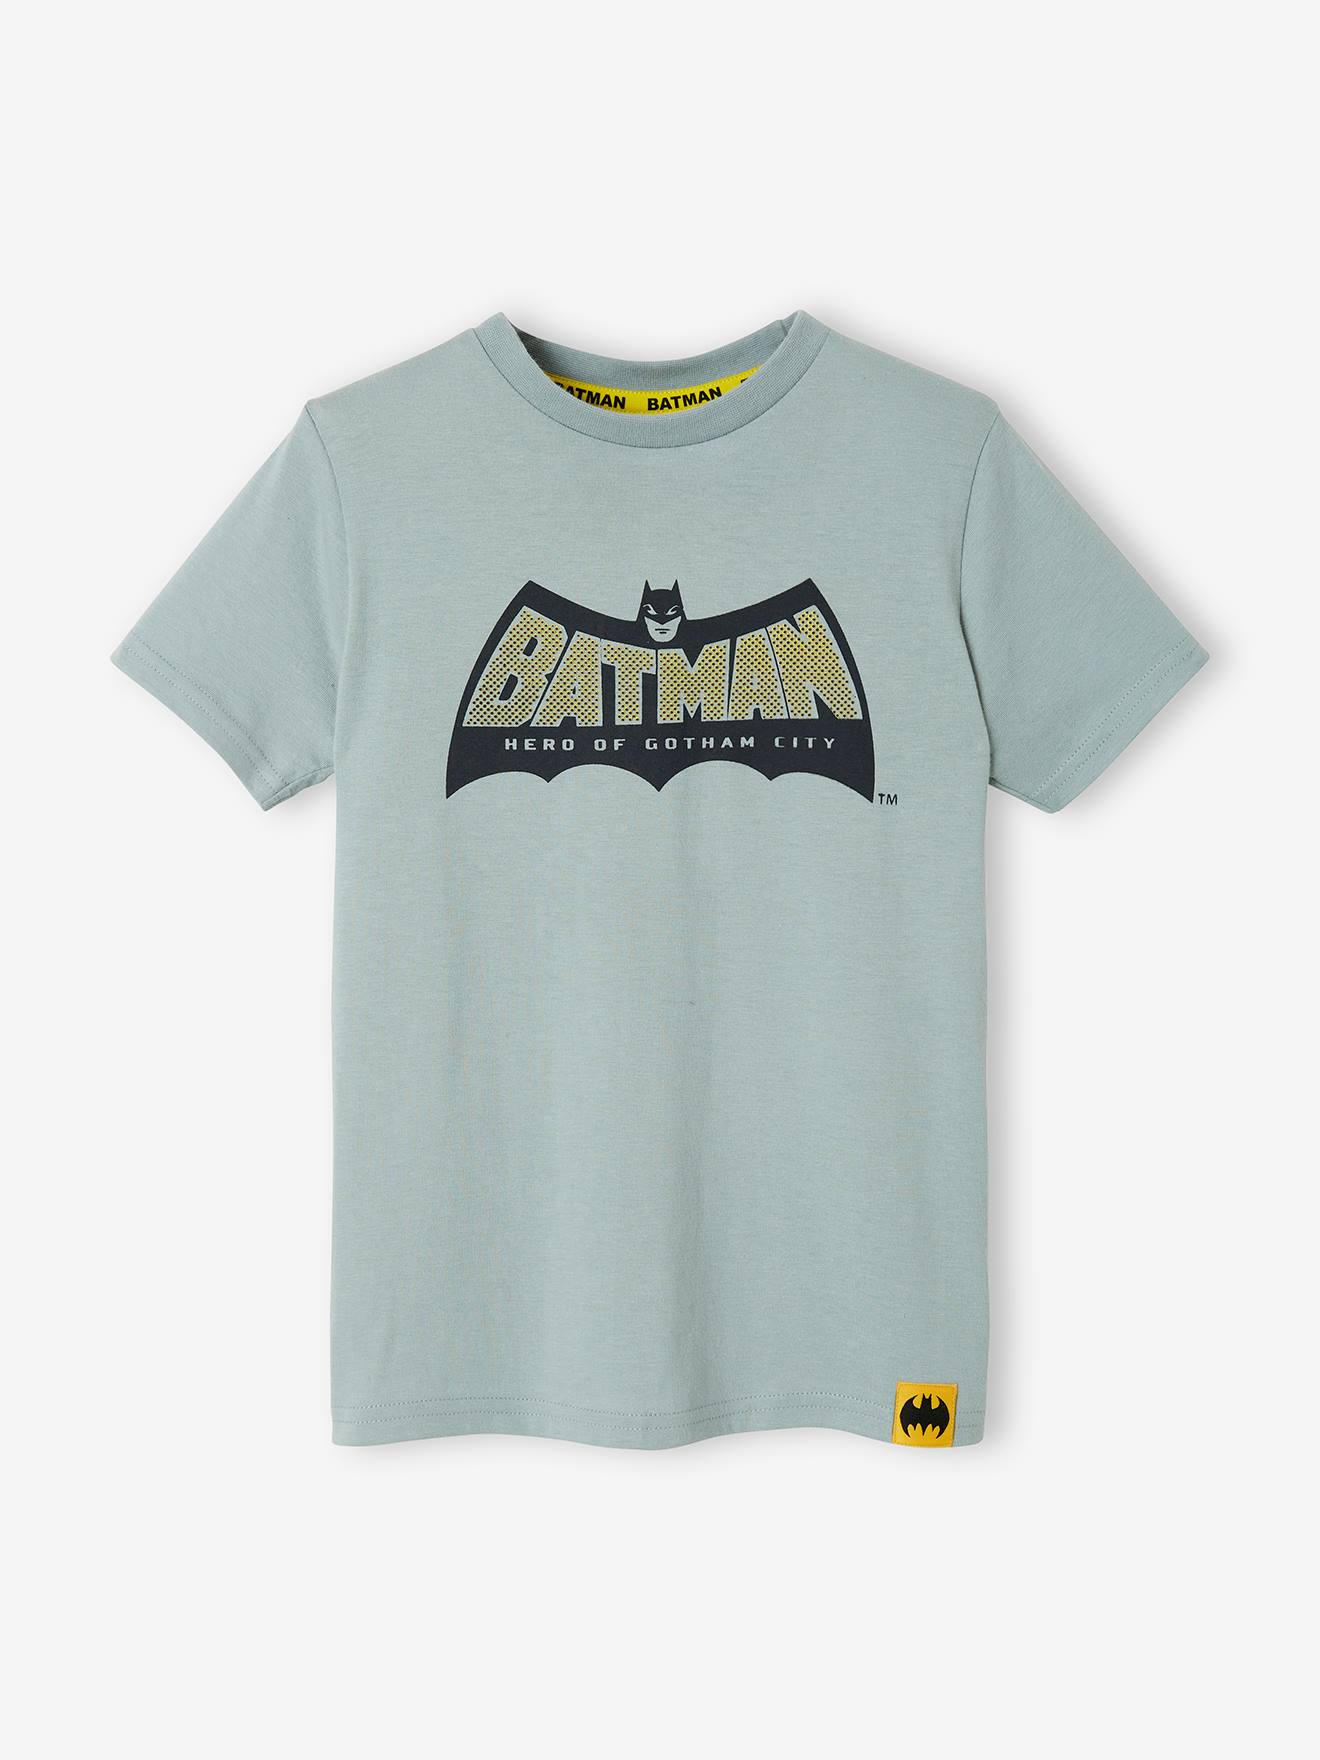 100% Official DC COMICS Merch Kids Boys Grey T-SHIRT Top Gotham City BATMAN 